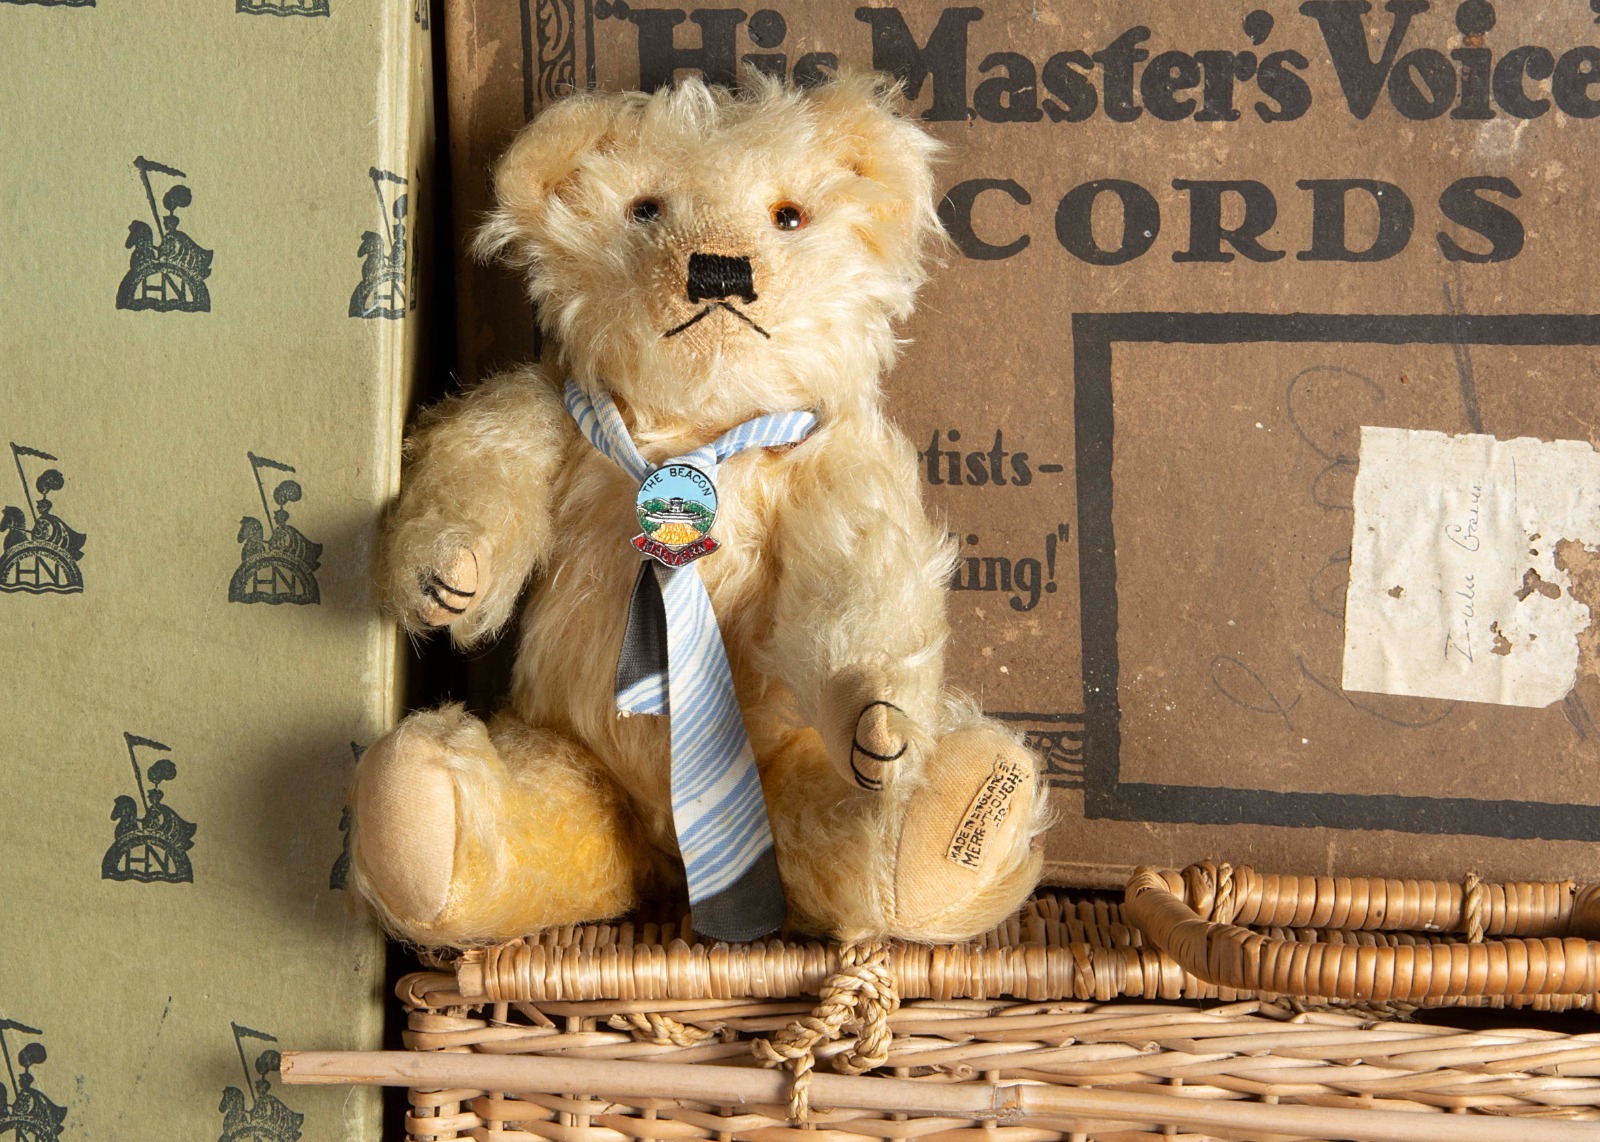 Susan Collard vintage teddy bear collection